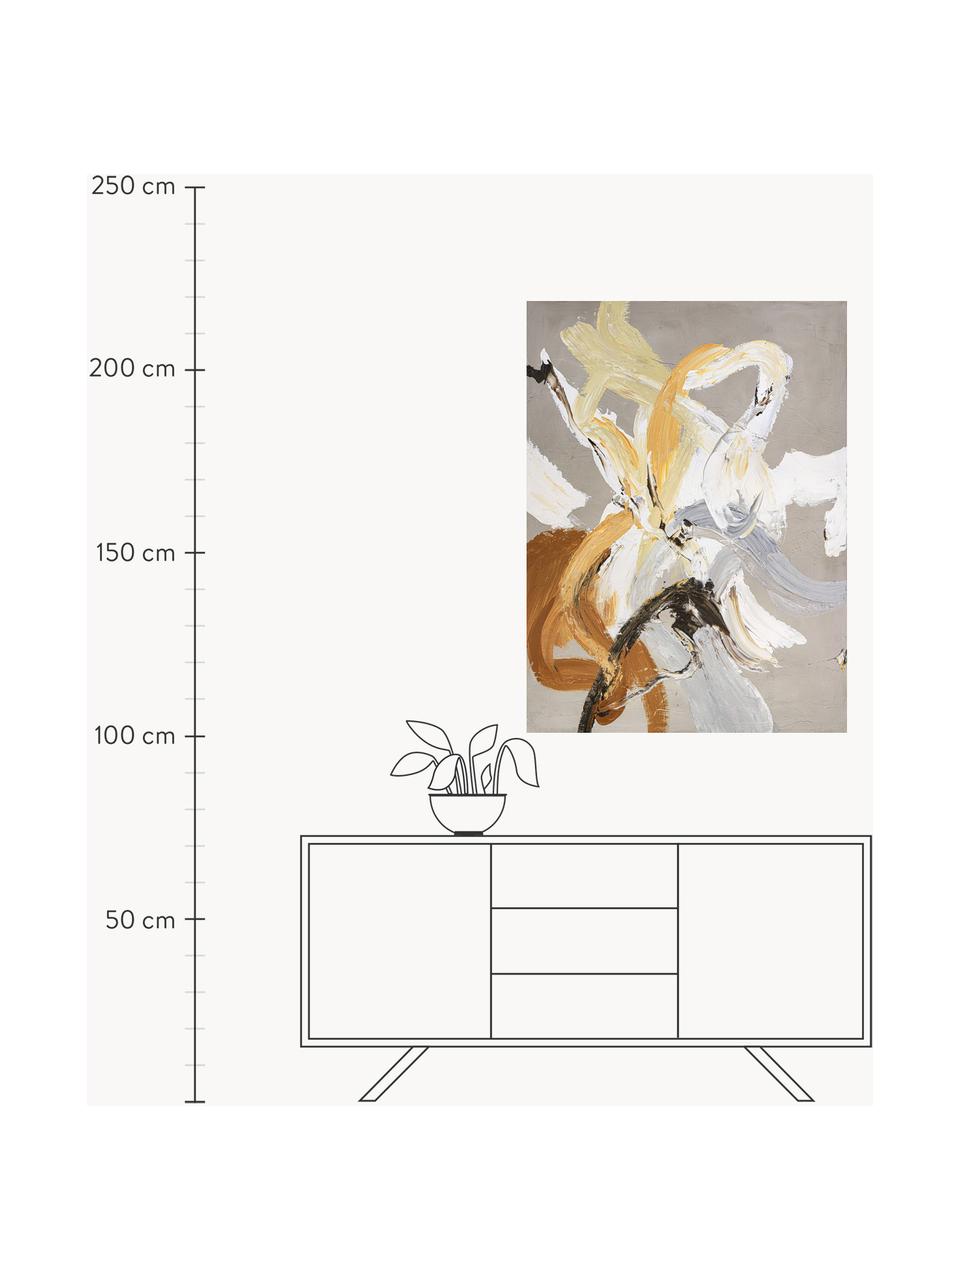 Quadro su tela dipinto a mano Go Ahead, Tonalità gialle, tonalità grigie, bianco, marrone, Larg. 88 x Alt. 118 cm